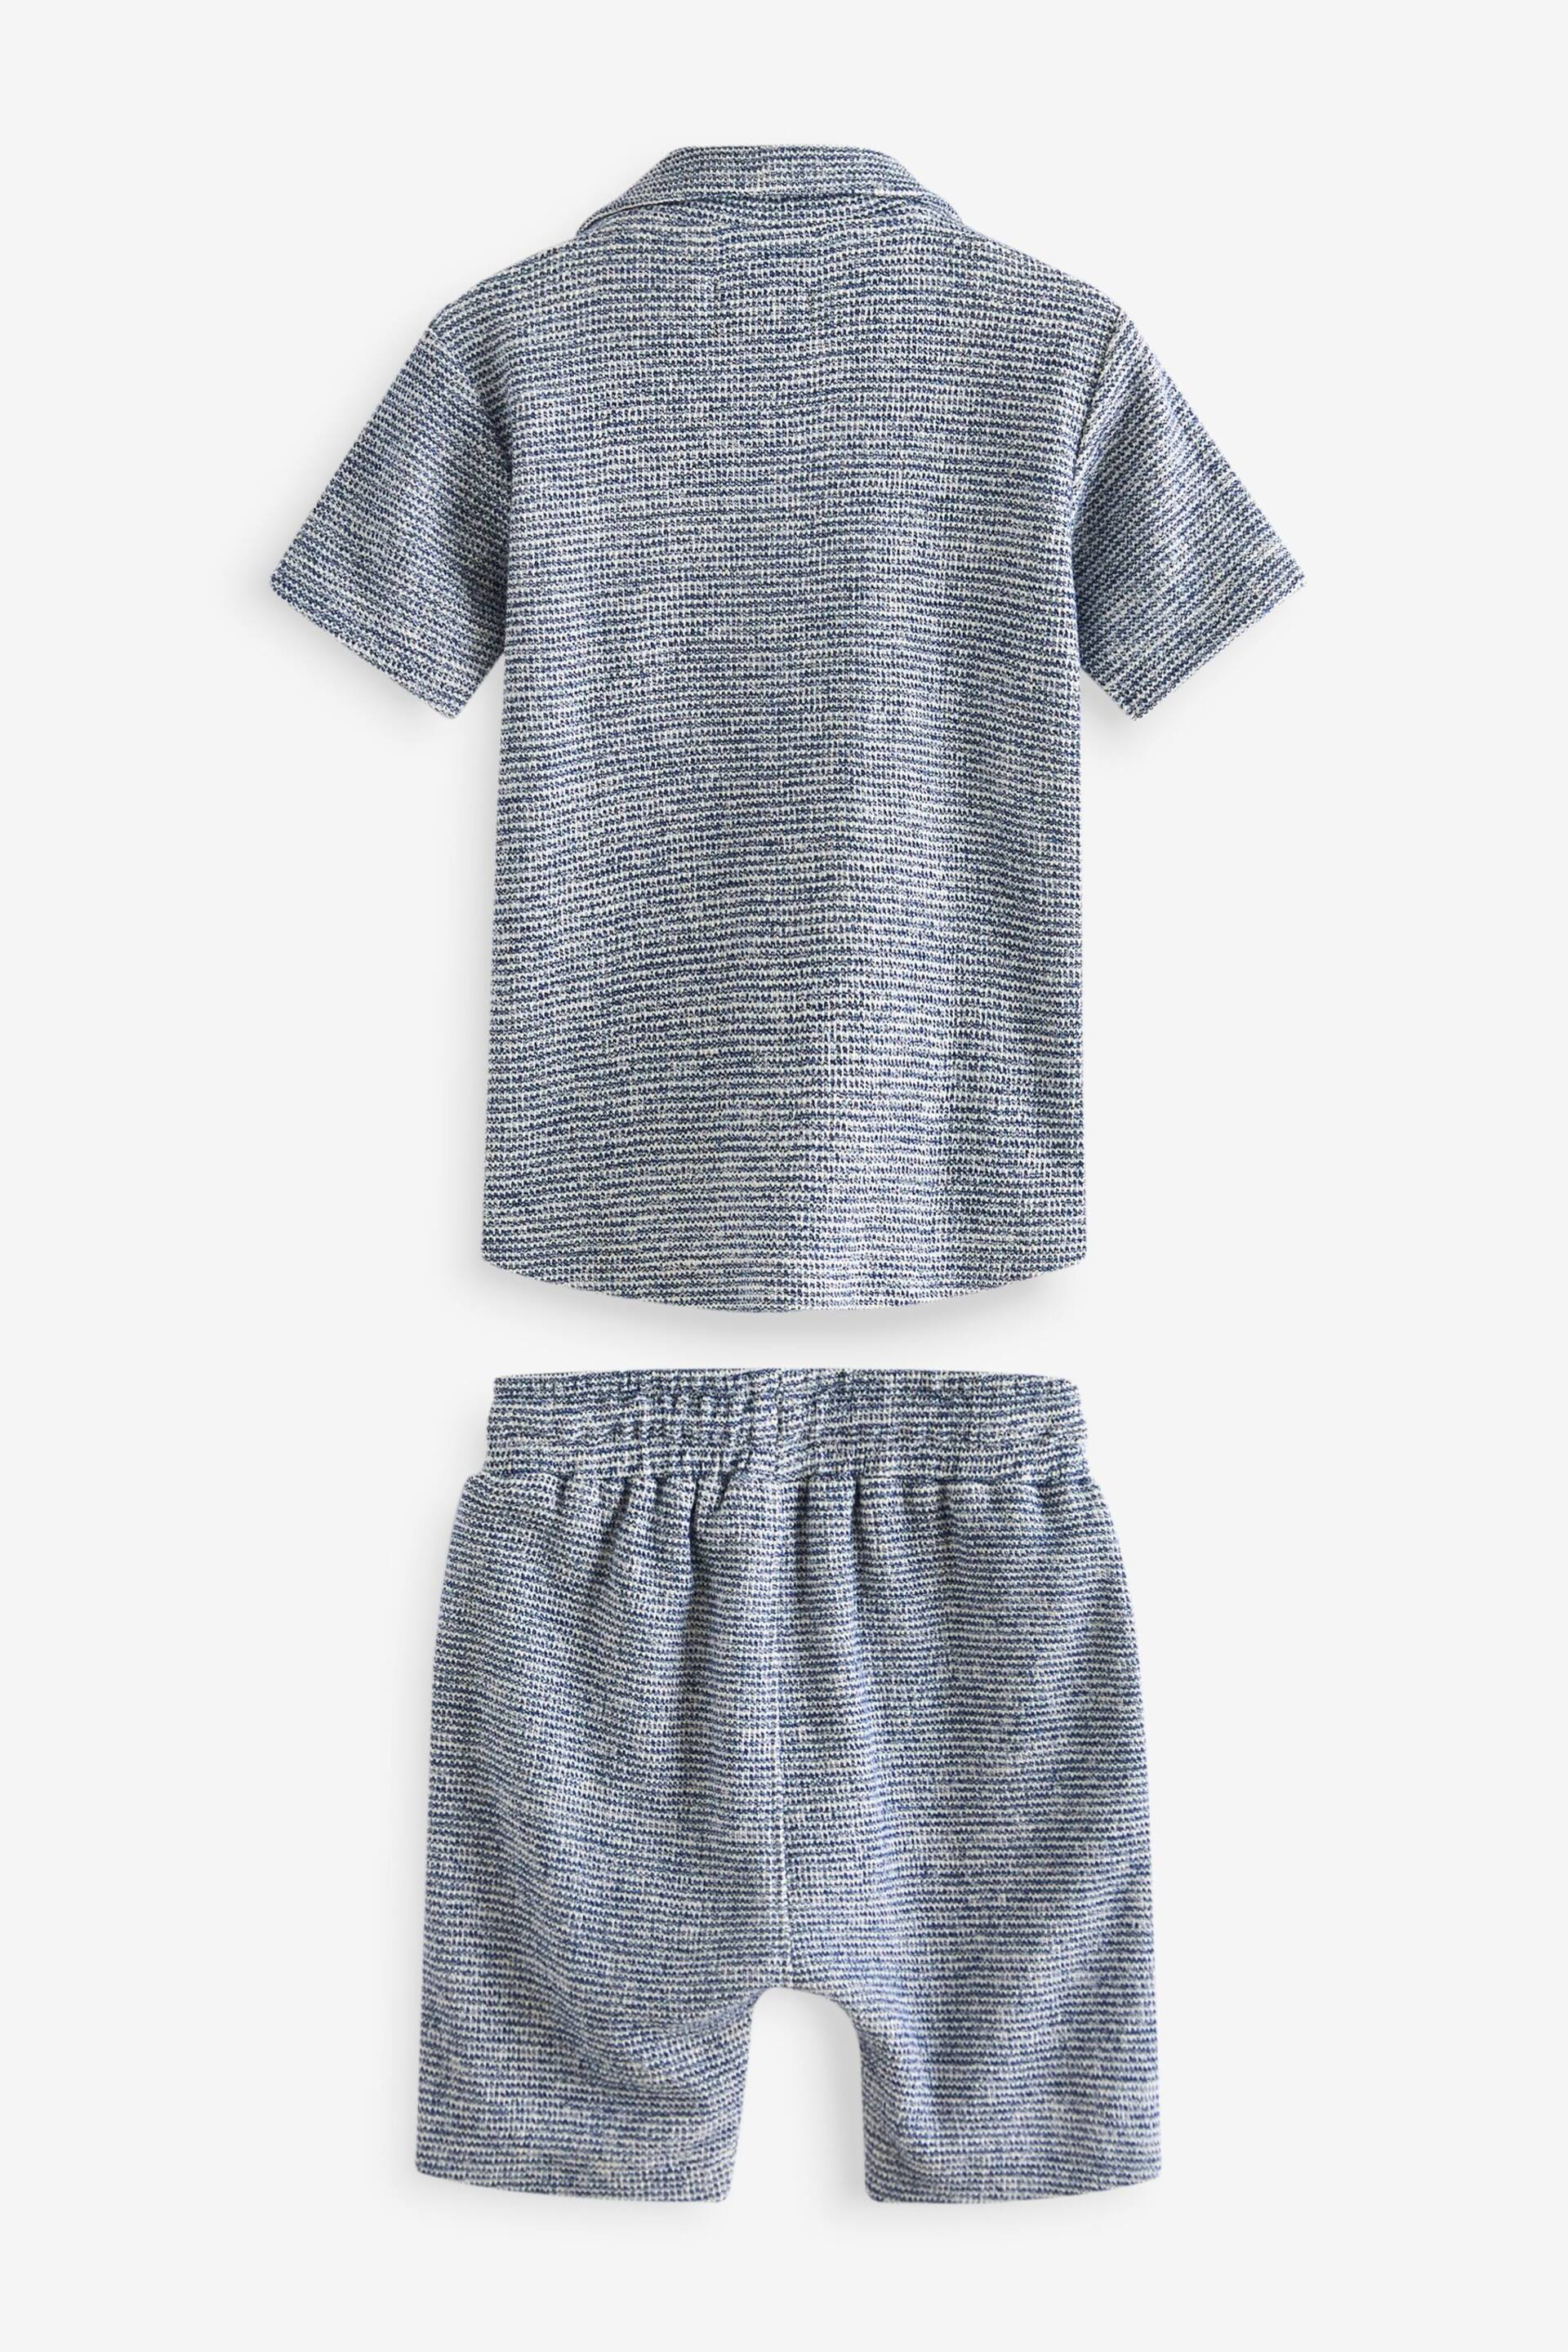 Blue/White Short Sleeve Pattern Shirt and Shorts Set (3mths-7yrs) - Image 5 of 6